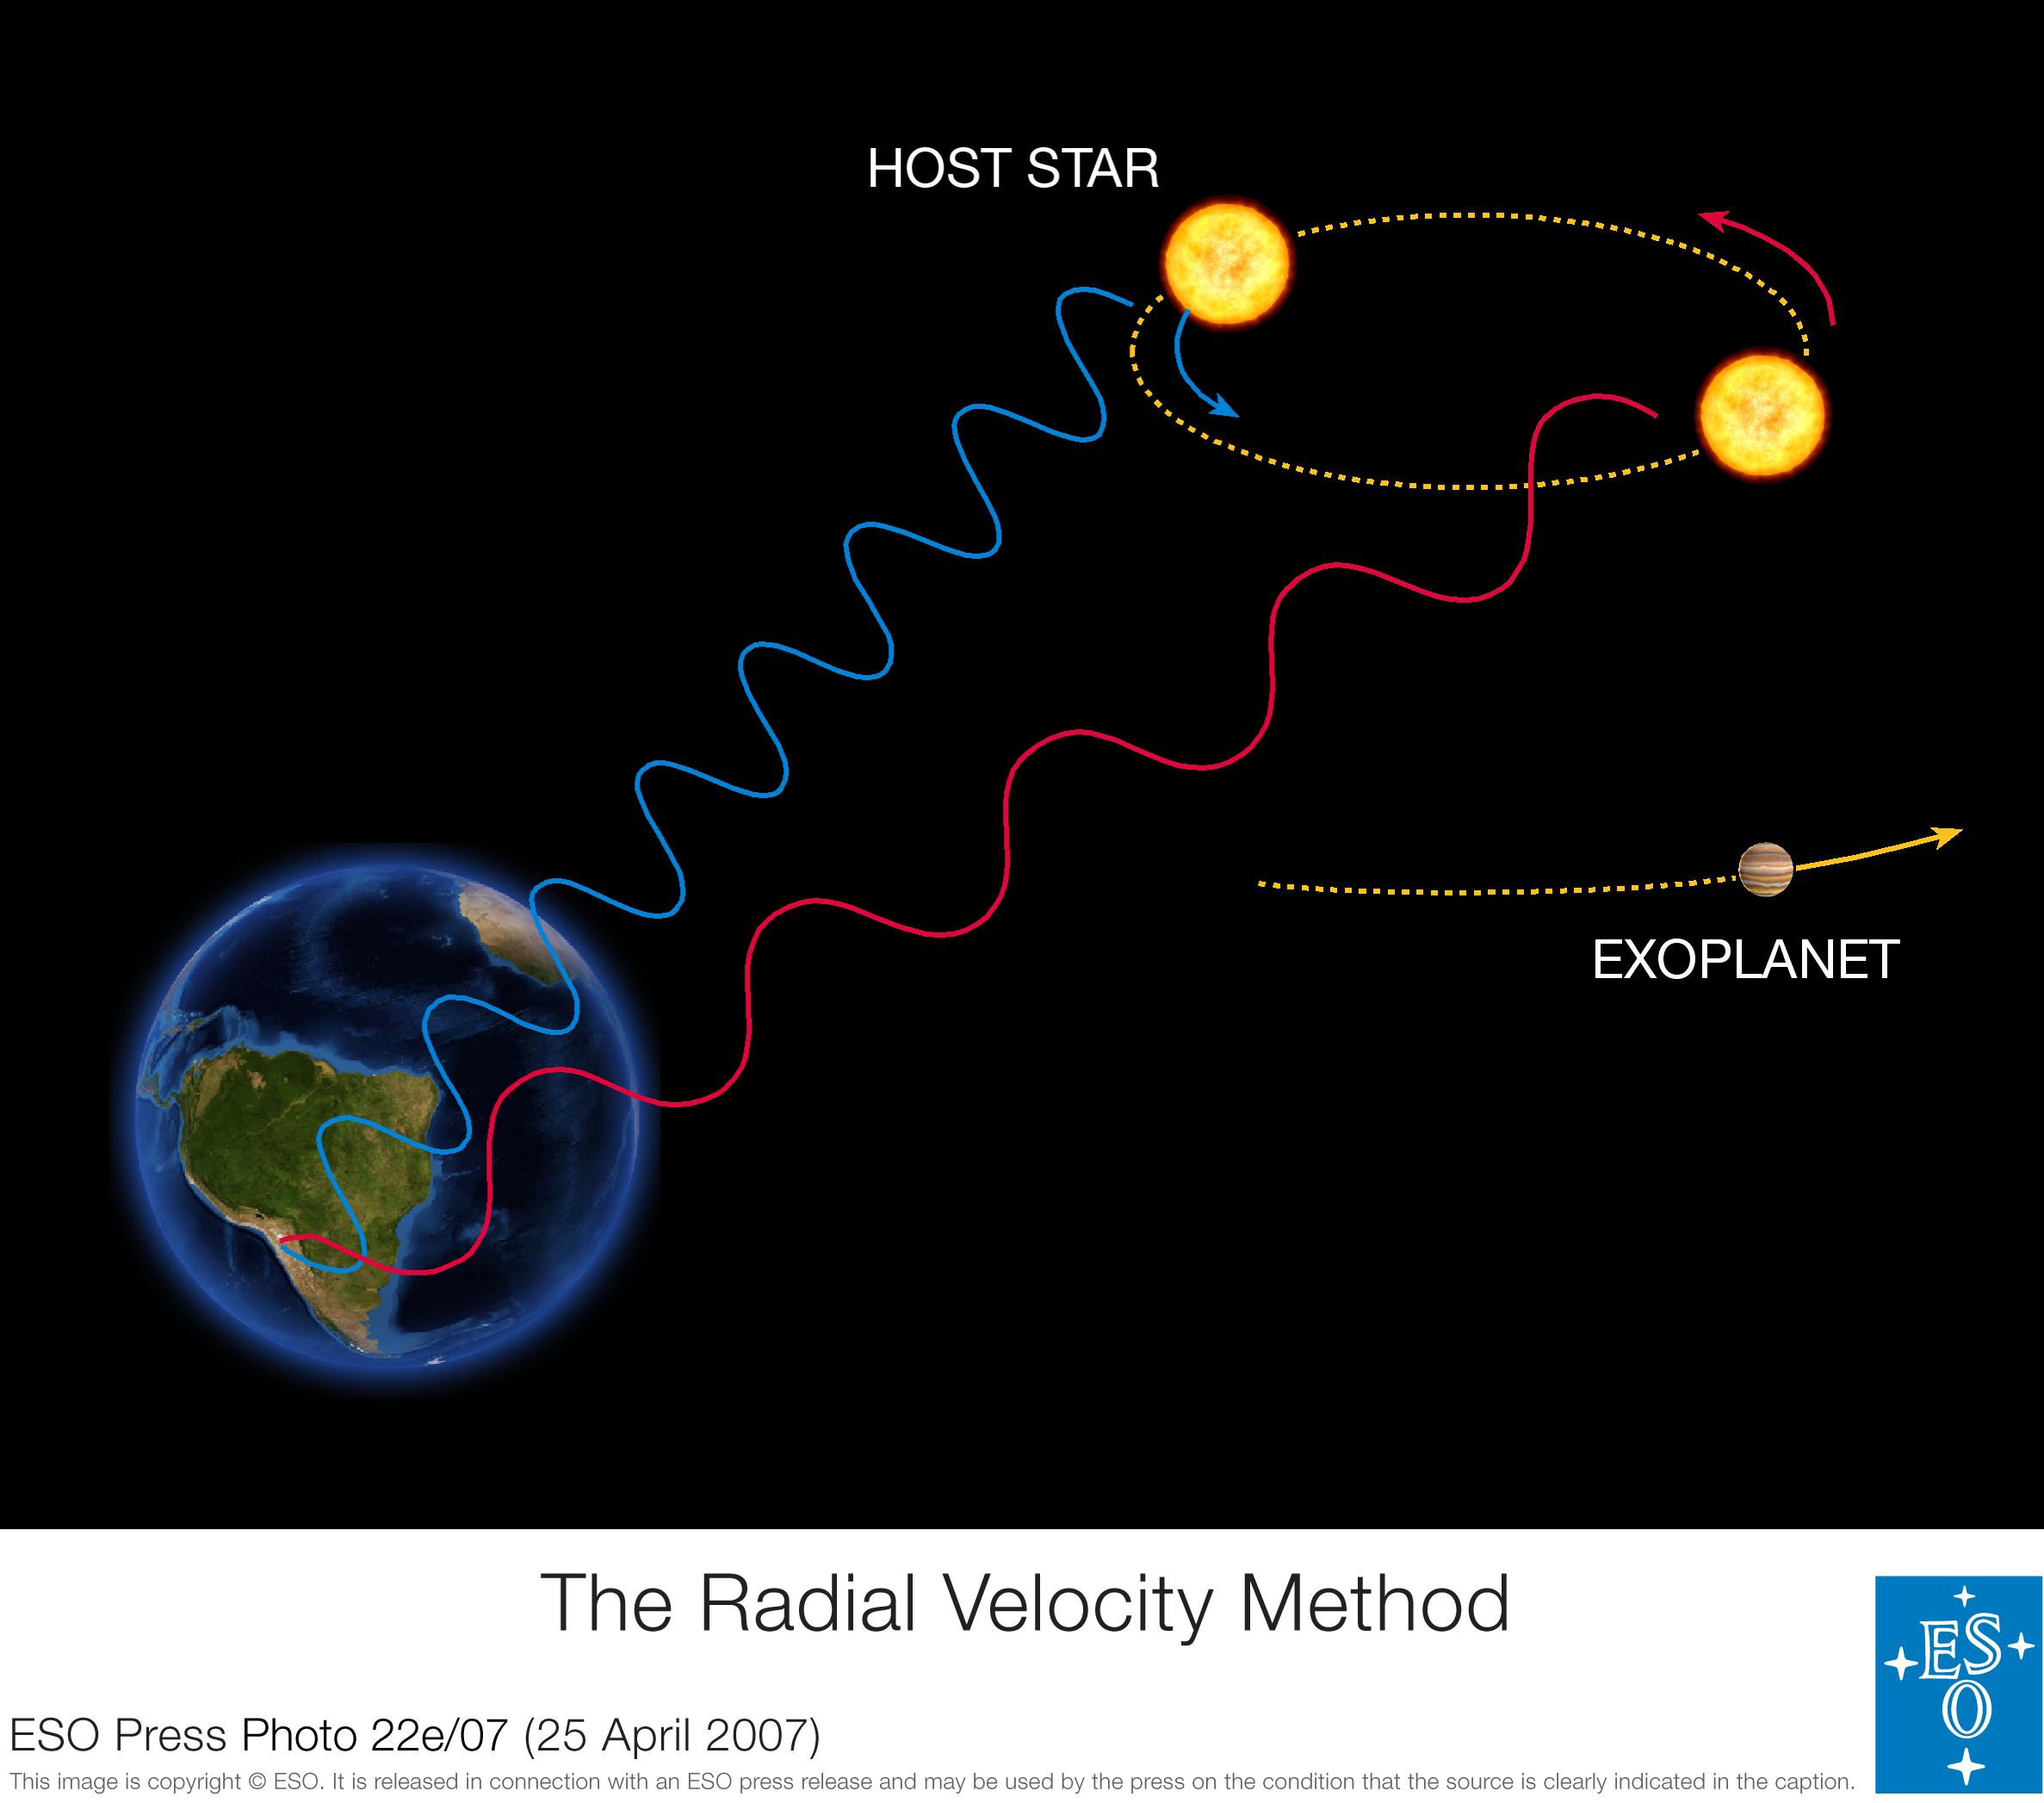 10/25/16 Methoden Radiele snelheidsmethode: ster en planeet